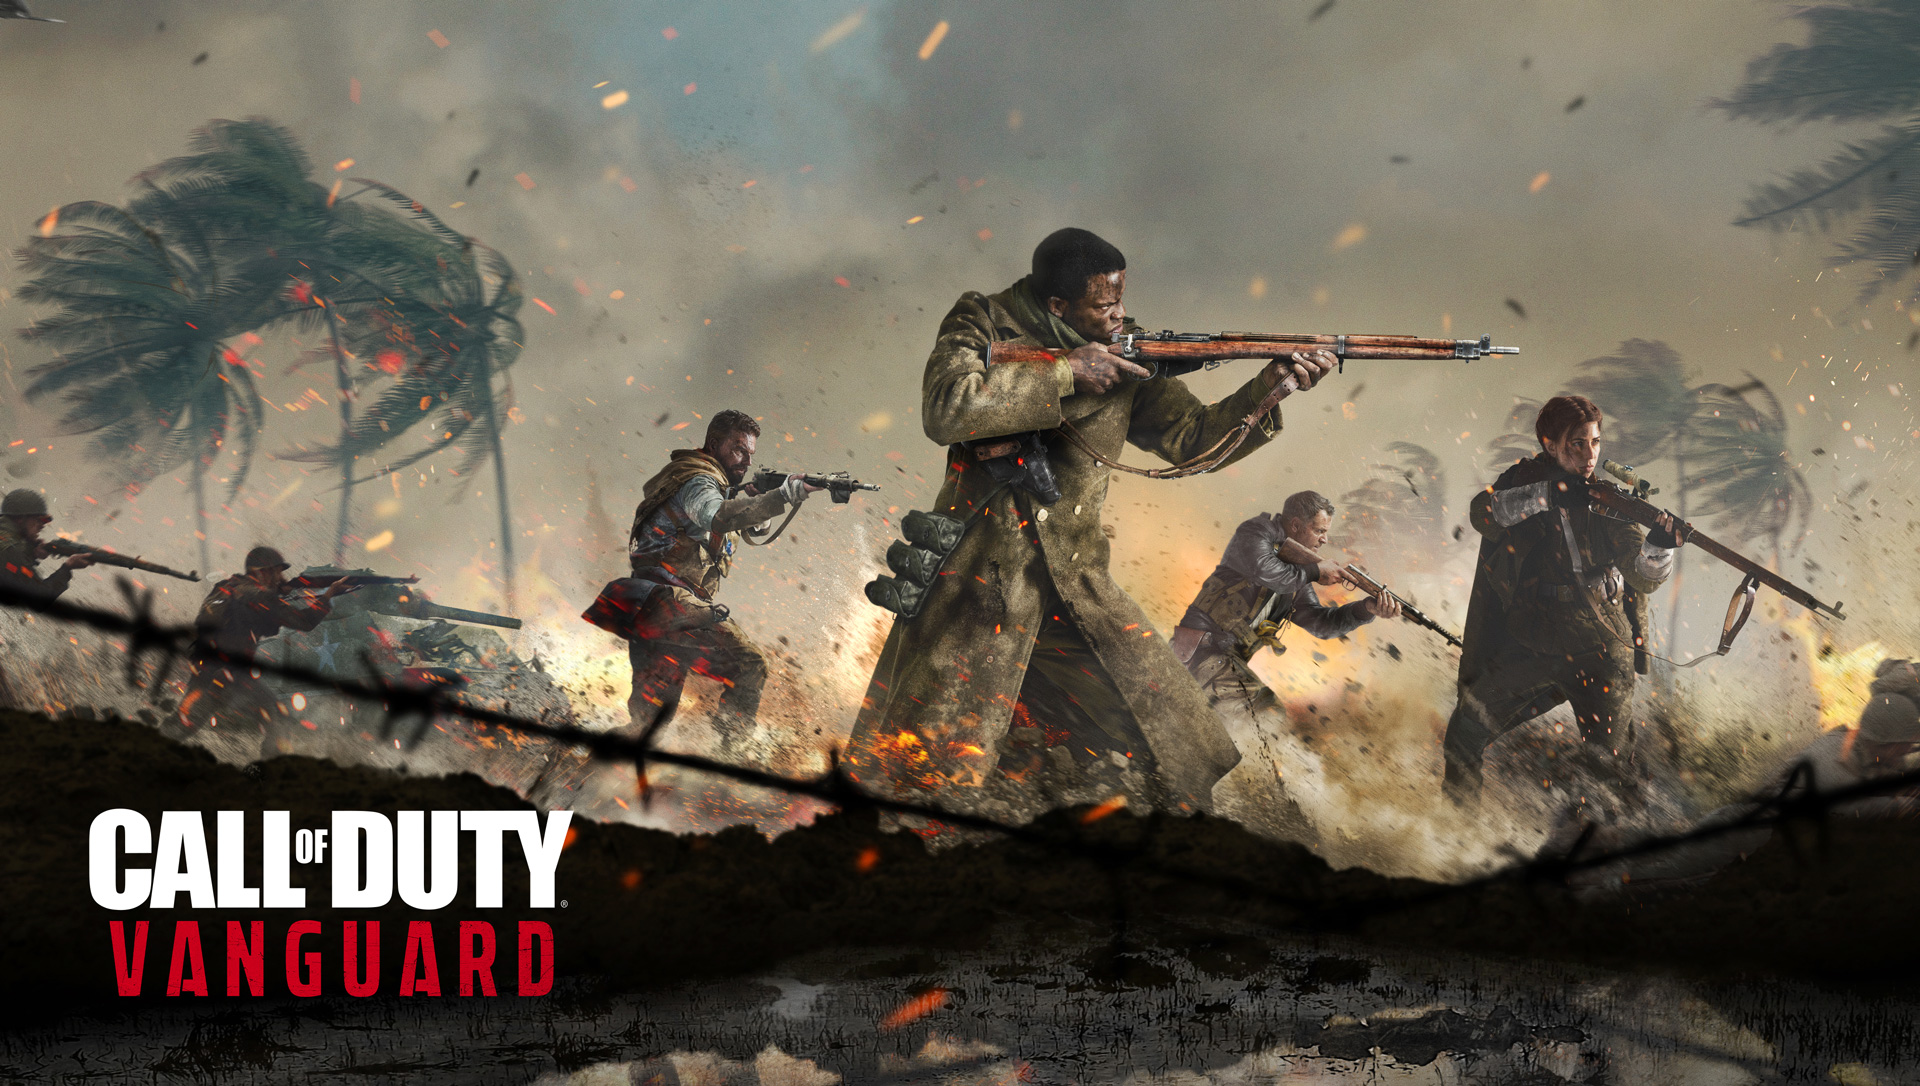 Call of Duty: Vanguard Trailer Reveals Story, Cast – Gameranx